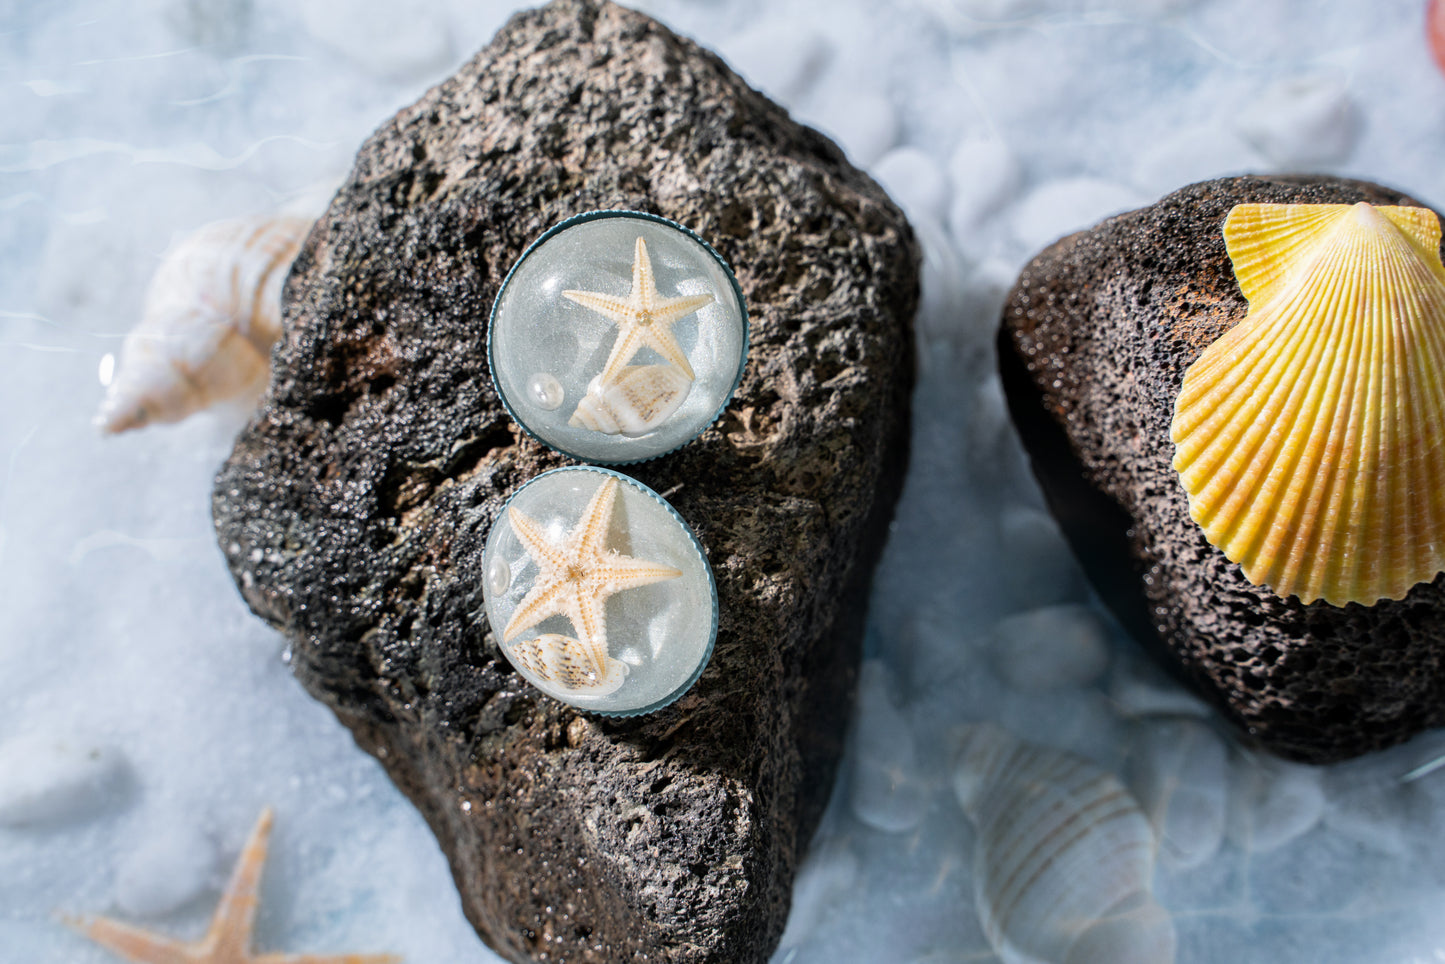 Starfish on Rock Studs - Blue Studs for Women